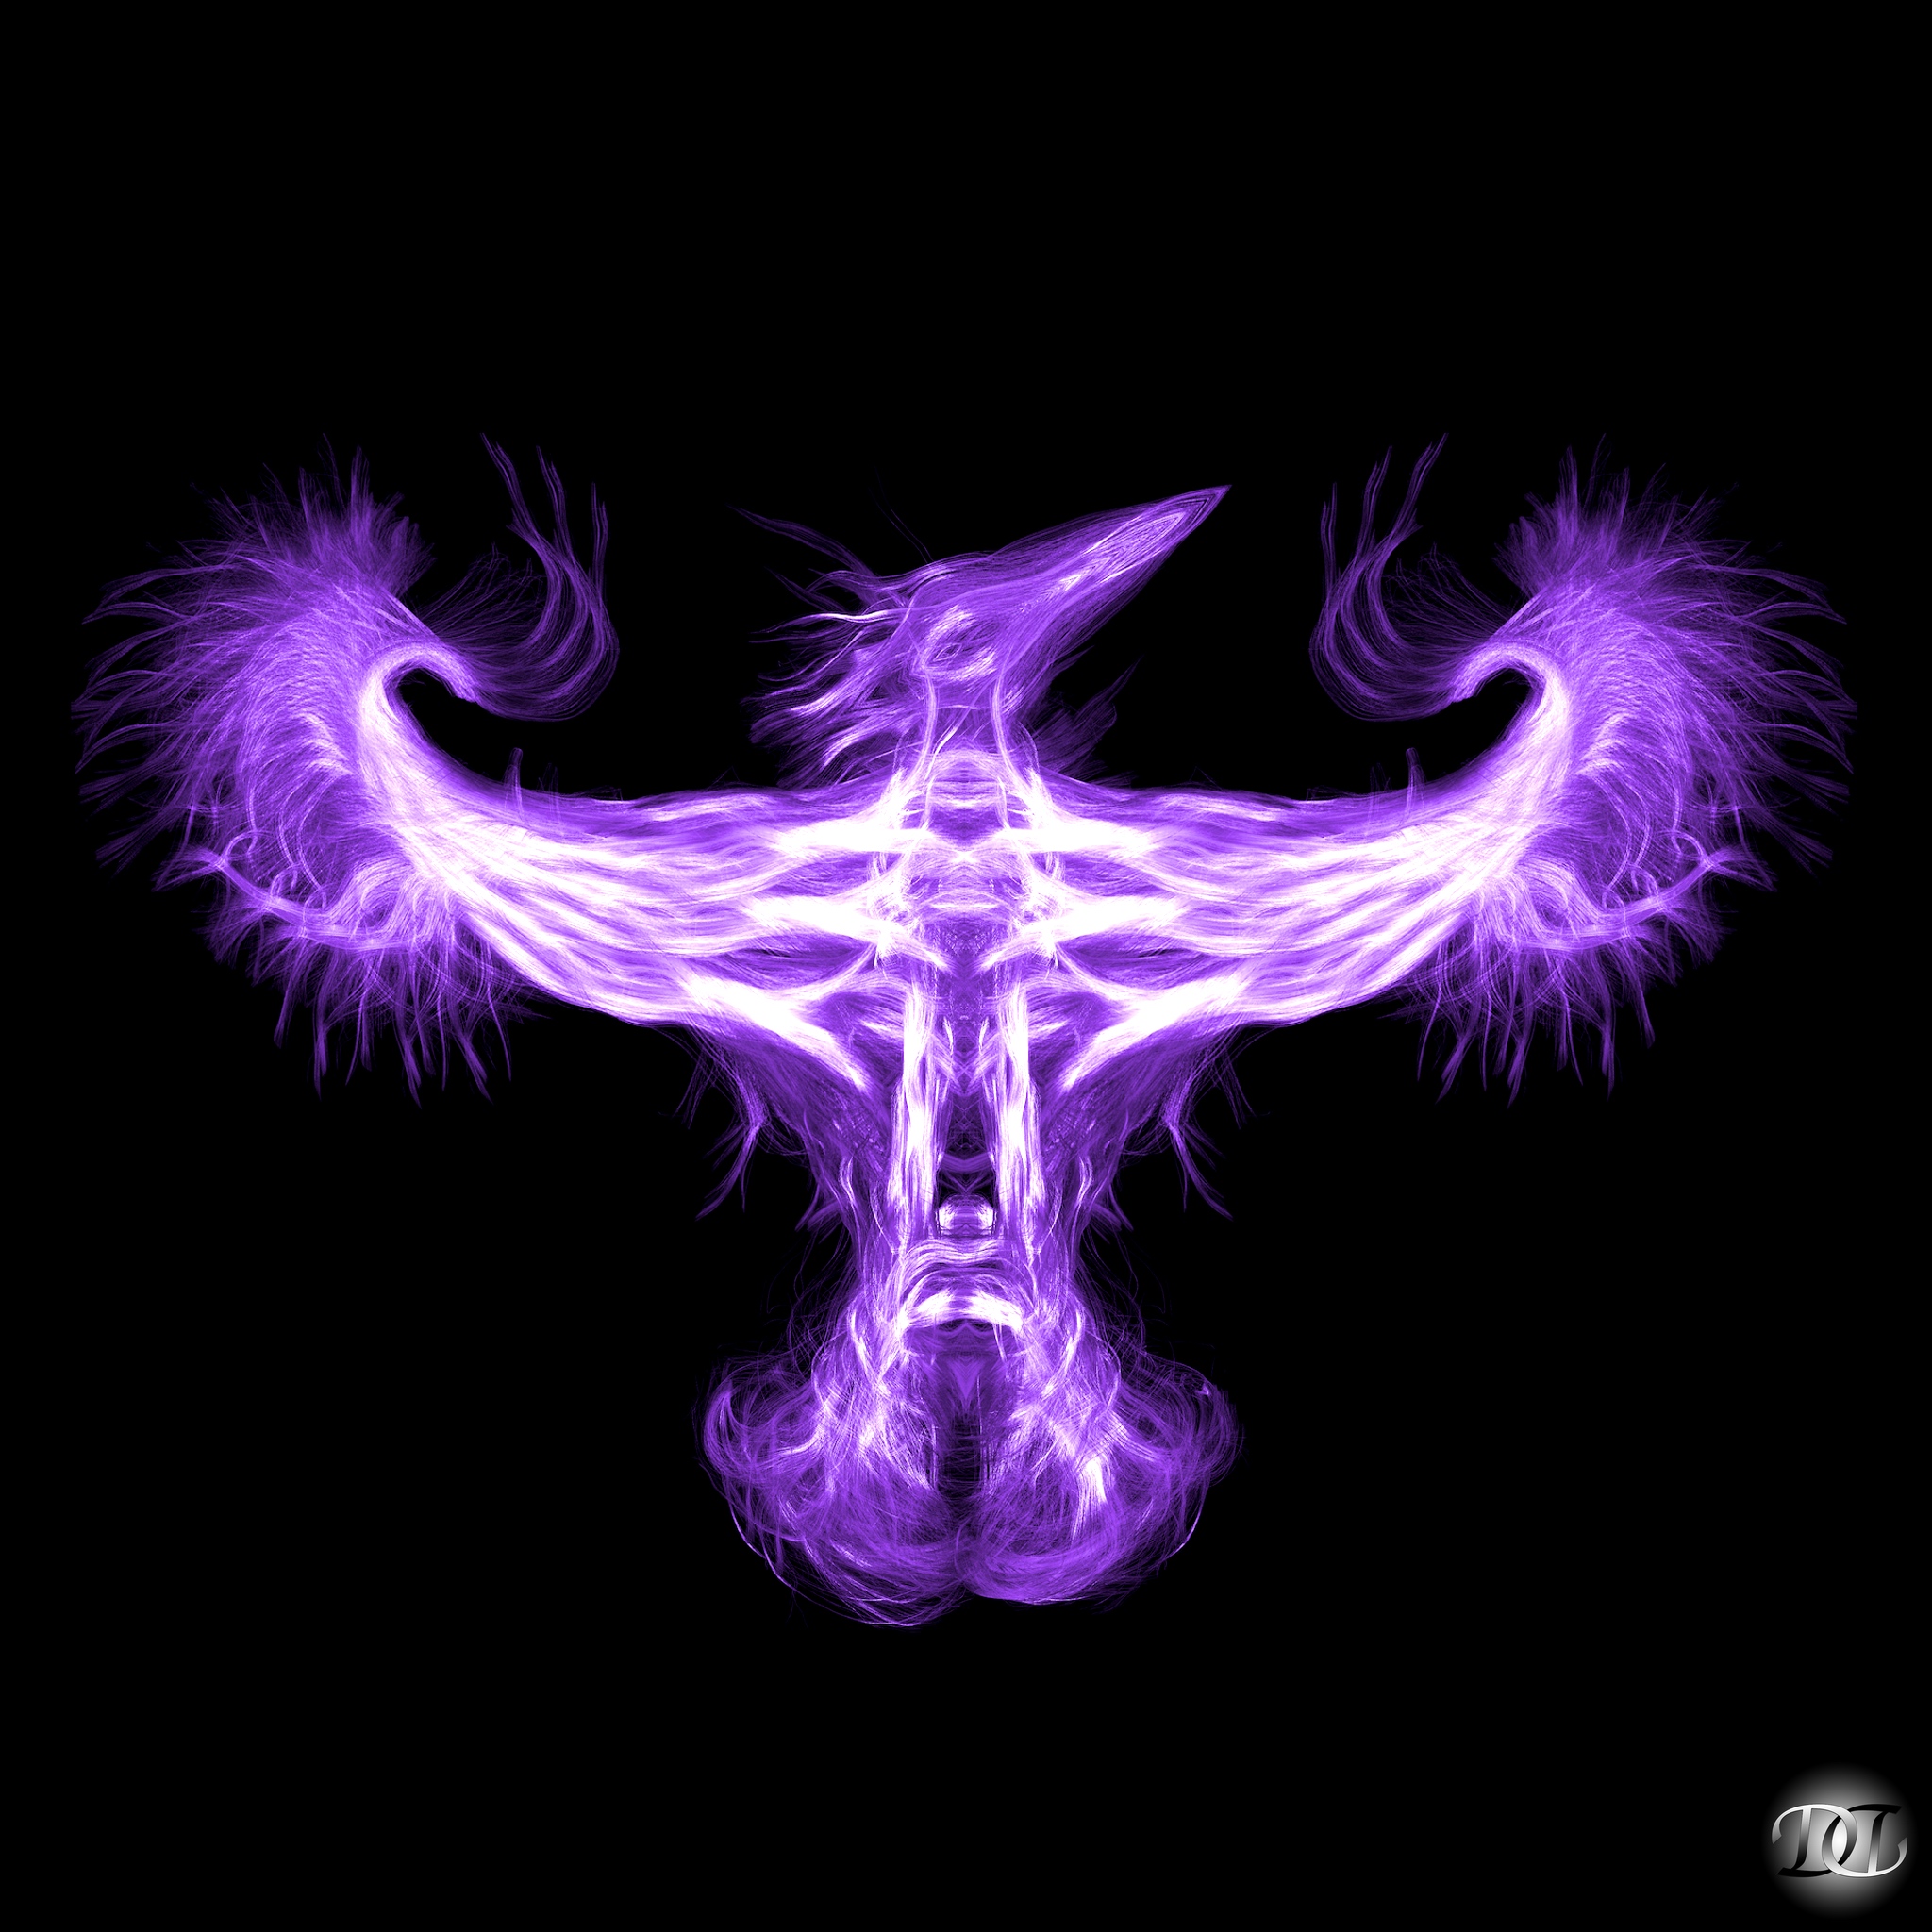 Purple Phoenix